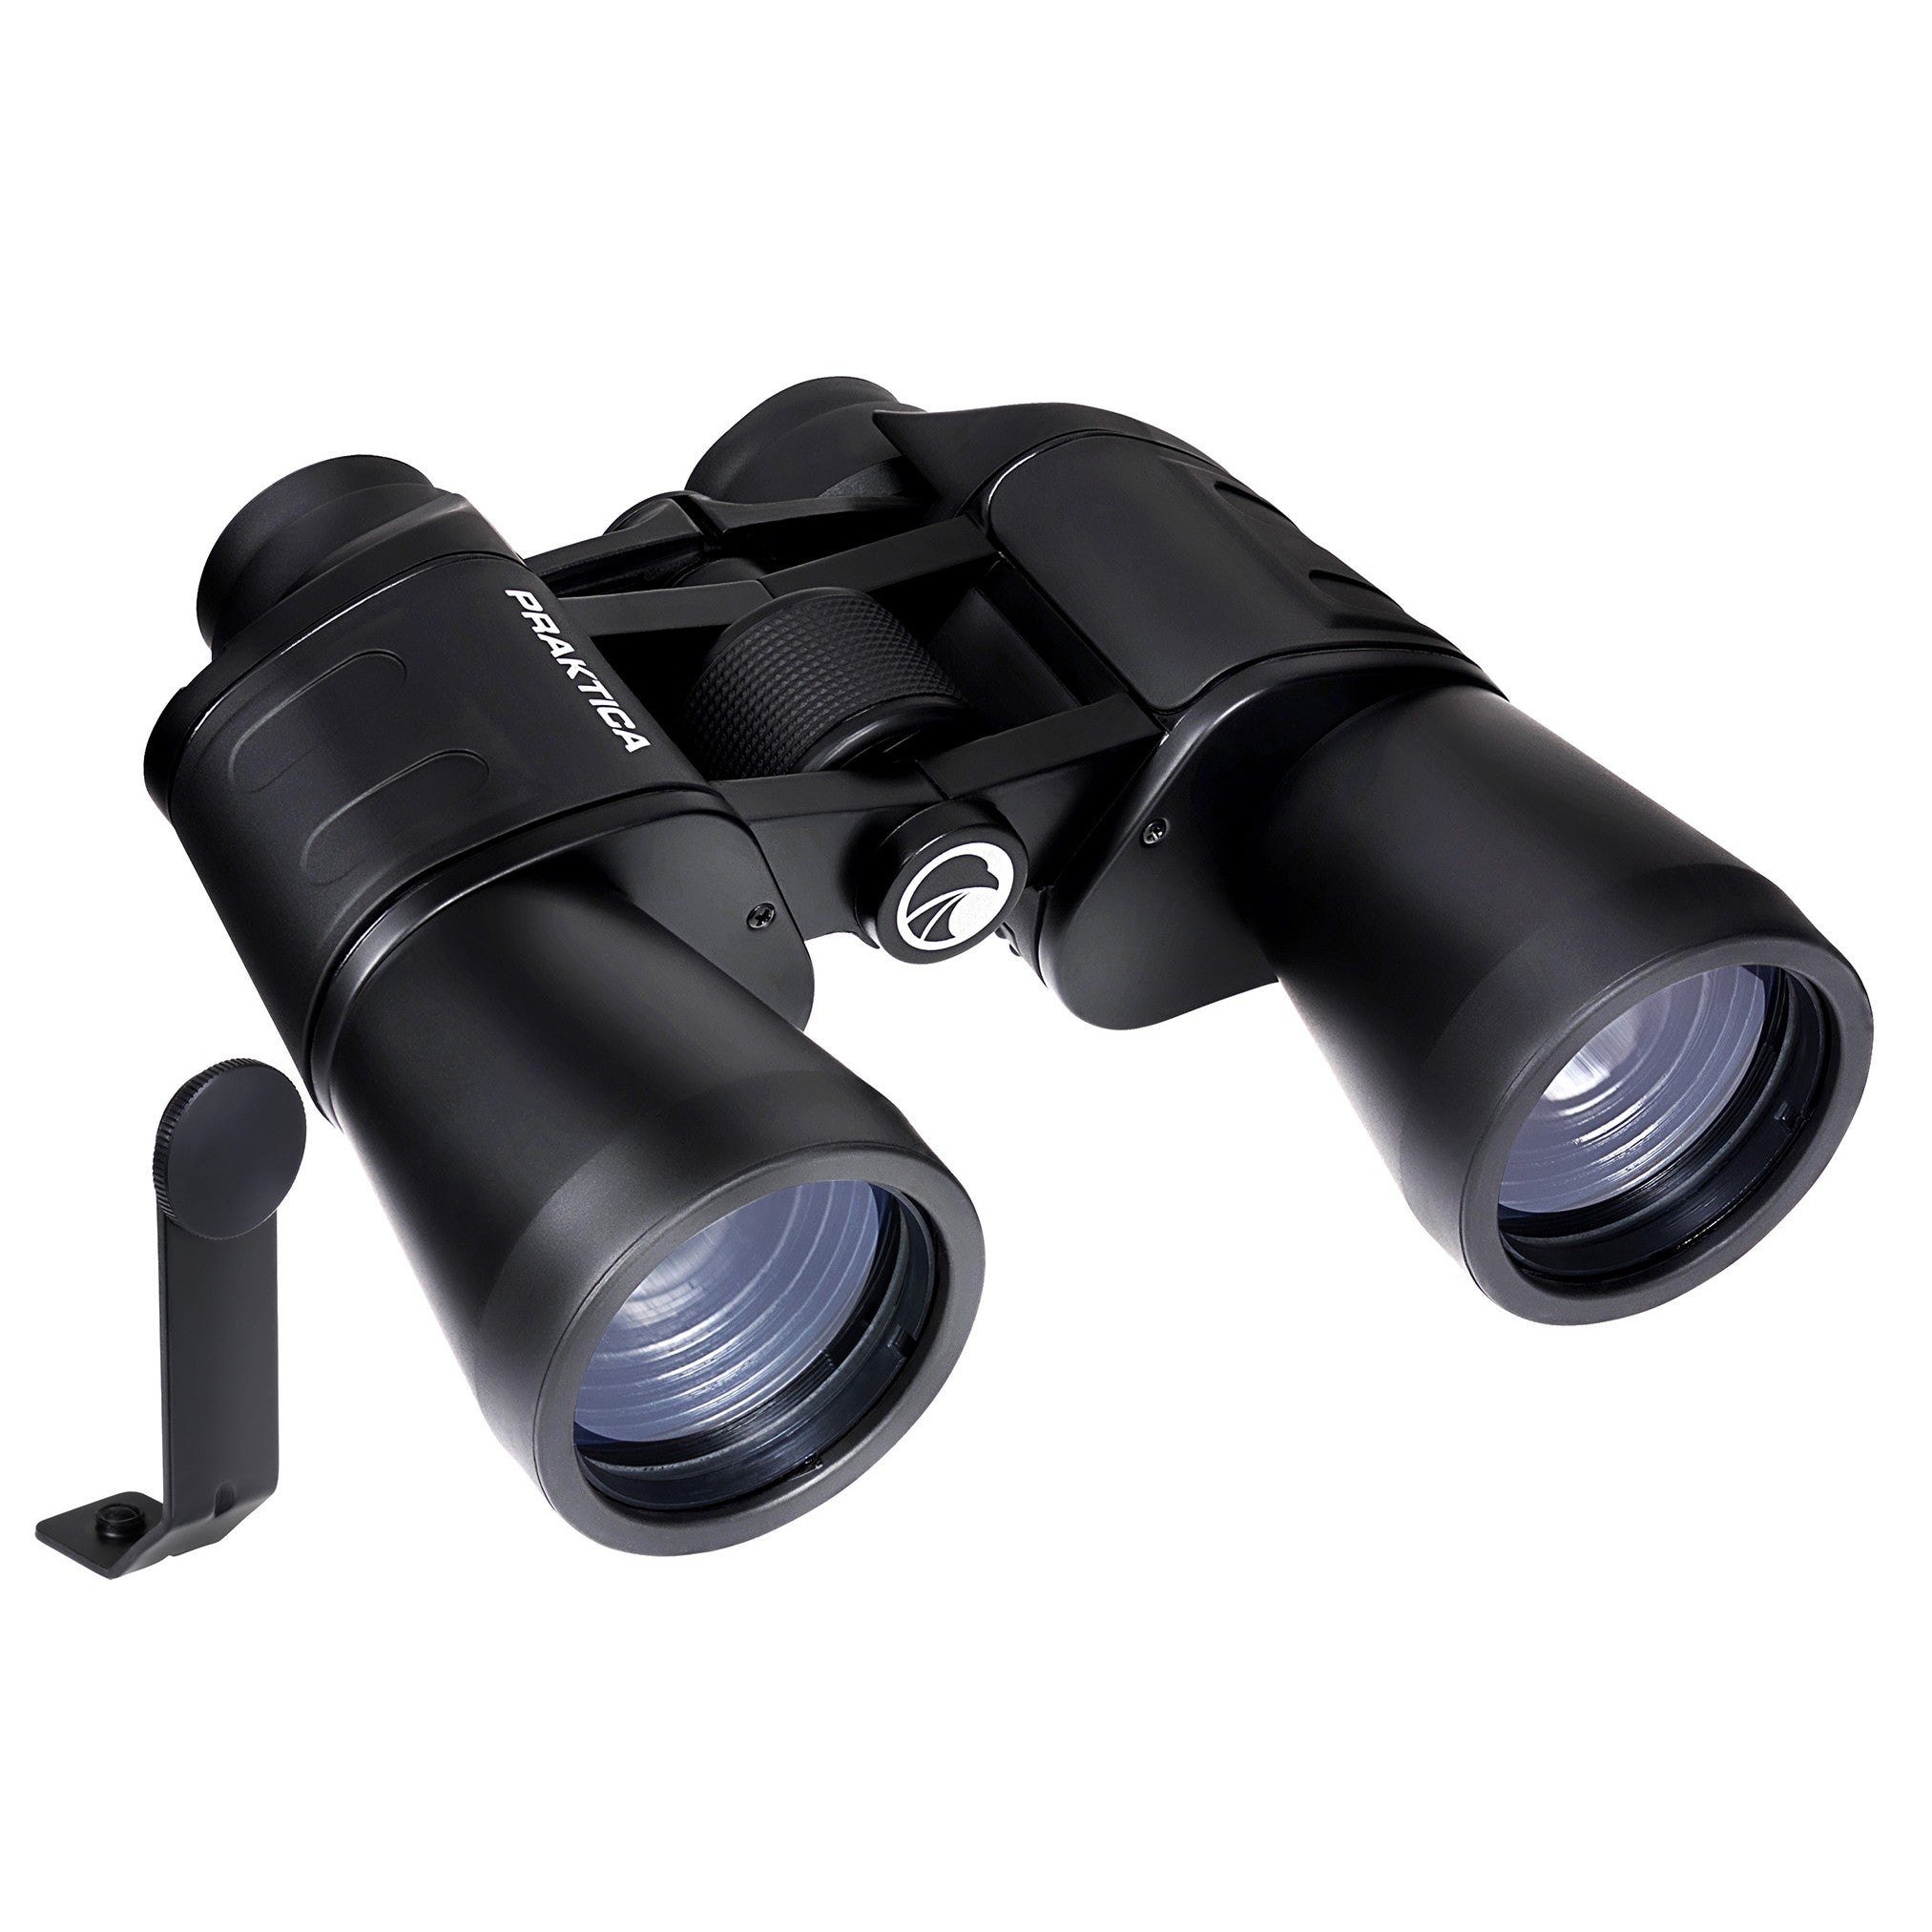 PRAKTICA Falcon 7x50mm Porro Prism Field Binoculars - Black (Binoculars + Tripod Mount)